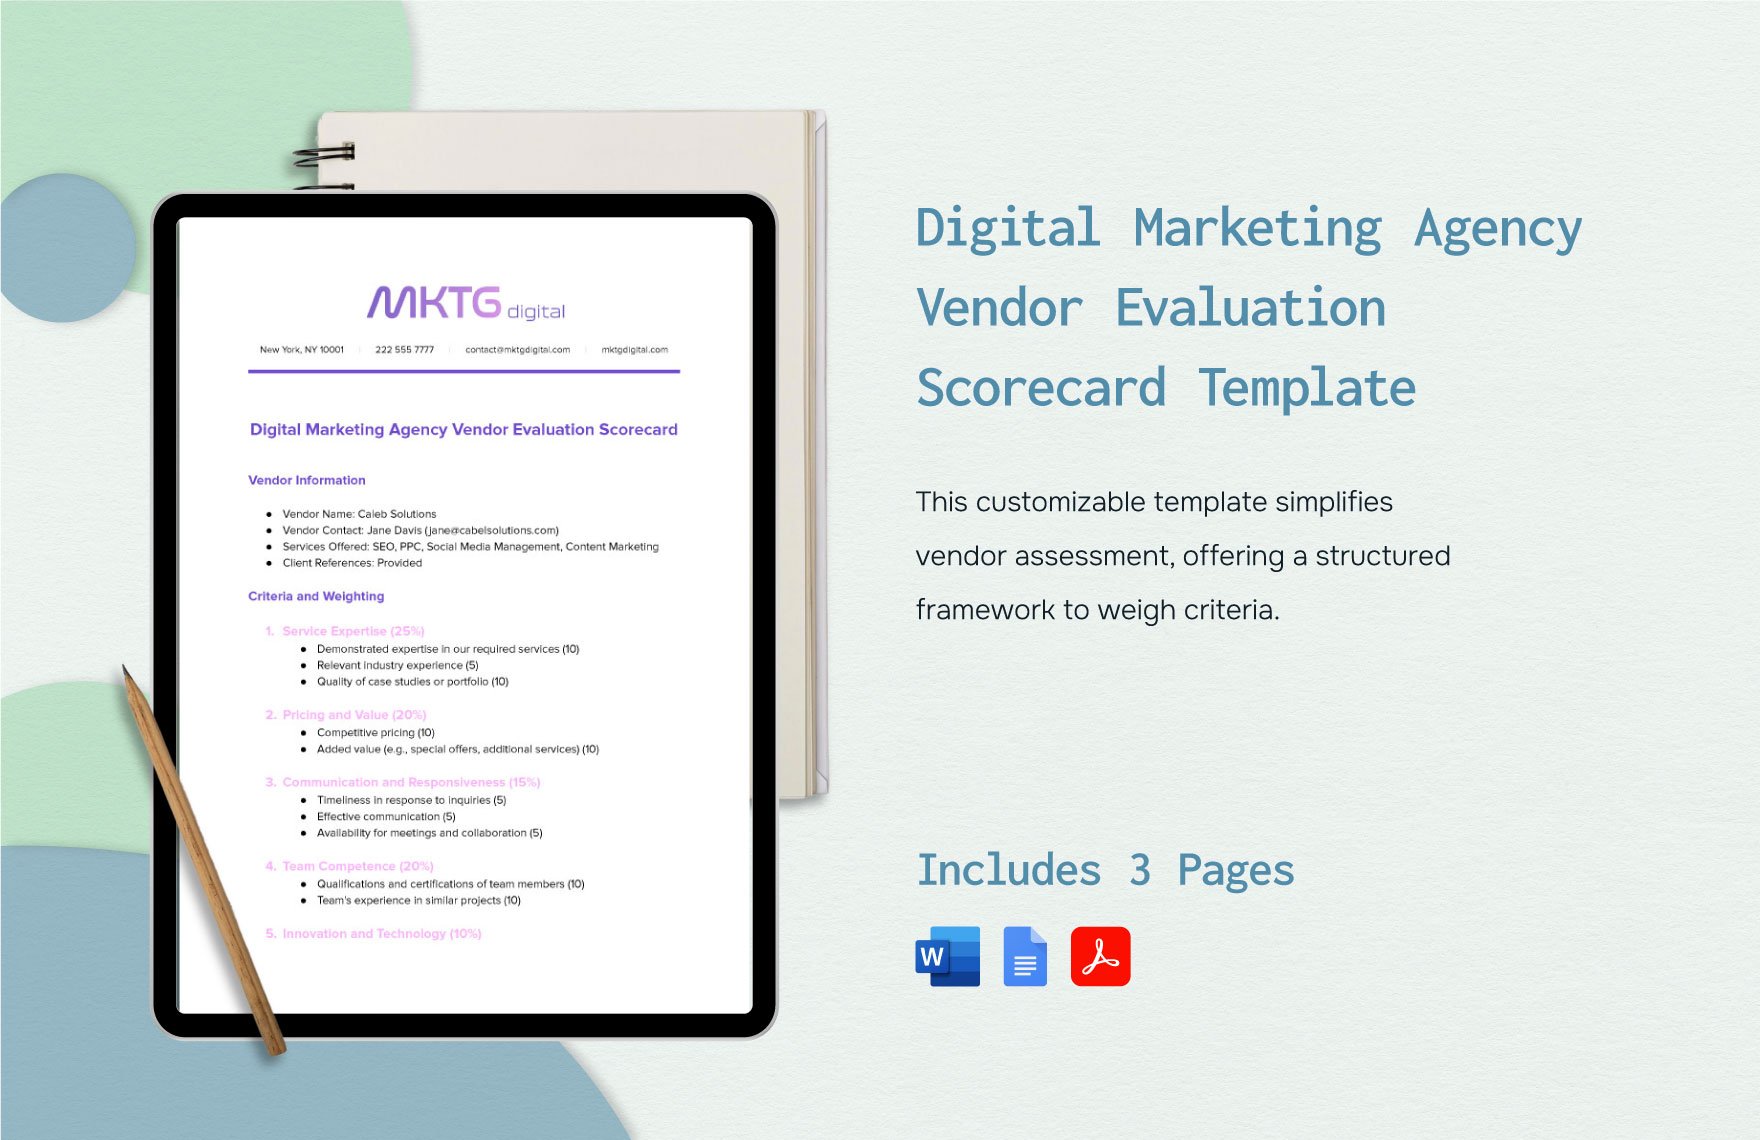 Digital Marketing Agency Vendor Evaluation Scorecard Template